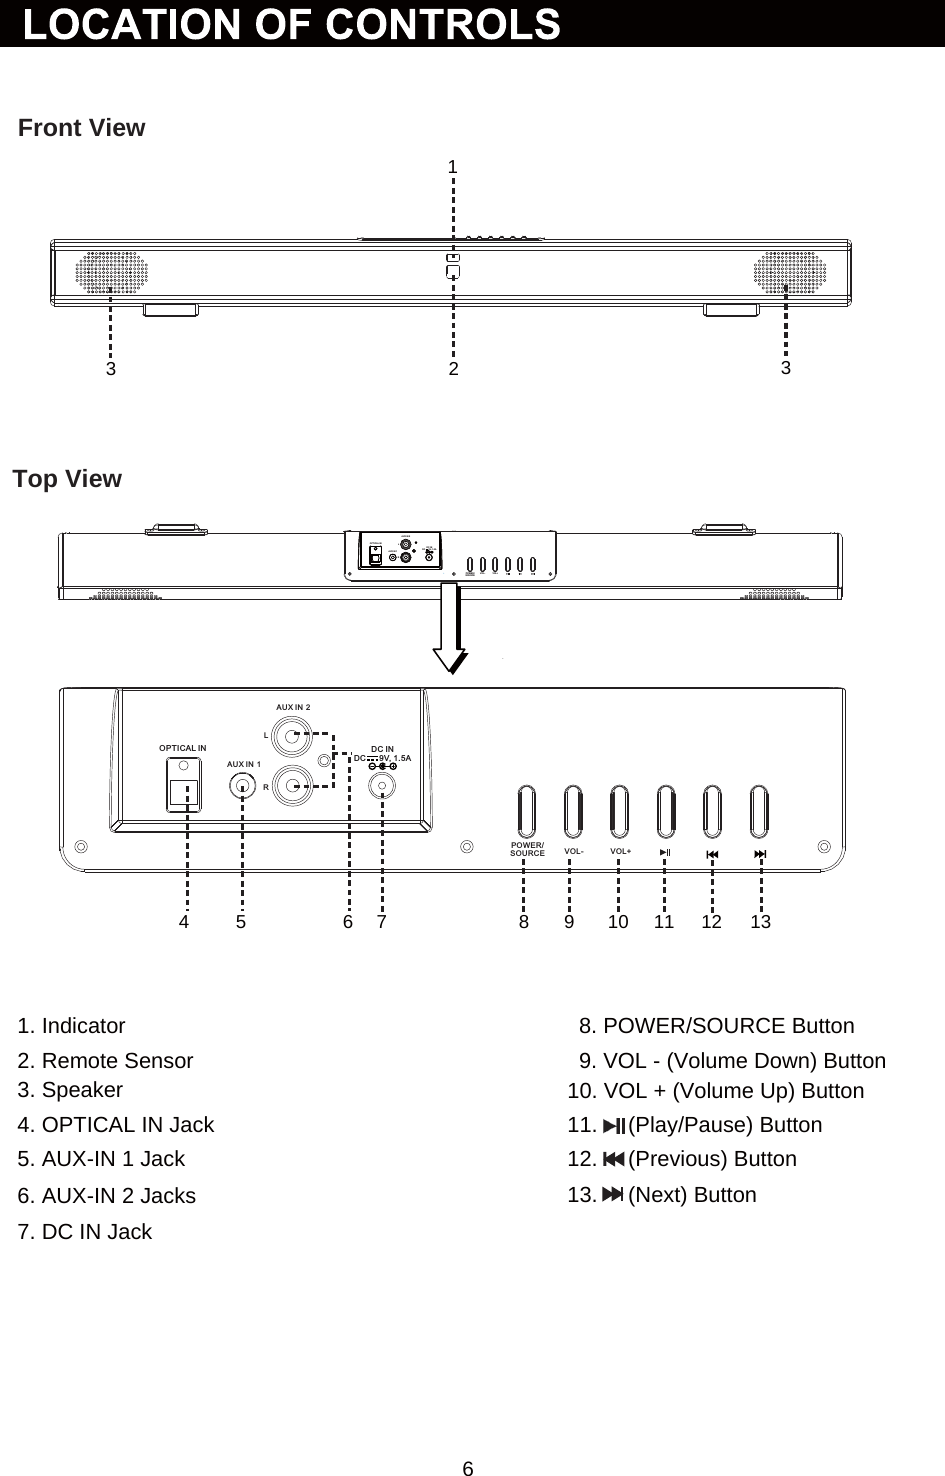 Front ViewTop ViewPOWER/SOURCEVOL- VOL+POWER/SOURCE VOL- VOL+AU X IN 1AU X IN 2LR 6AUX IN 1AUX IN 2LROPTICAL INDC INDC      9V, 1.5AOPTICAL IN DC I NDC      9 V, 1.5 A1. Indicator2. Remote Sensor3. Speaker4. OPTICAL IN Jack5. AUX-IN 1 Jack6. AUX-IN 2 Jacks7. DC IN Jack8. POWER/SOURCE Button9. VOL - (Volume Down) Button10. VOL + (Volume Up) Button11.     (Play/Pause) Button12.     (Previous) Button13.     (Next) Button123 34 5 6 7 8 9 10 11 12 13